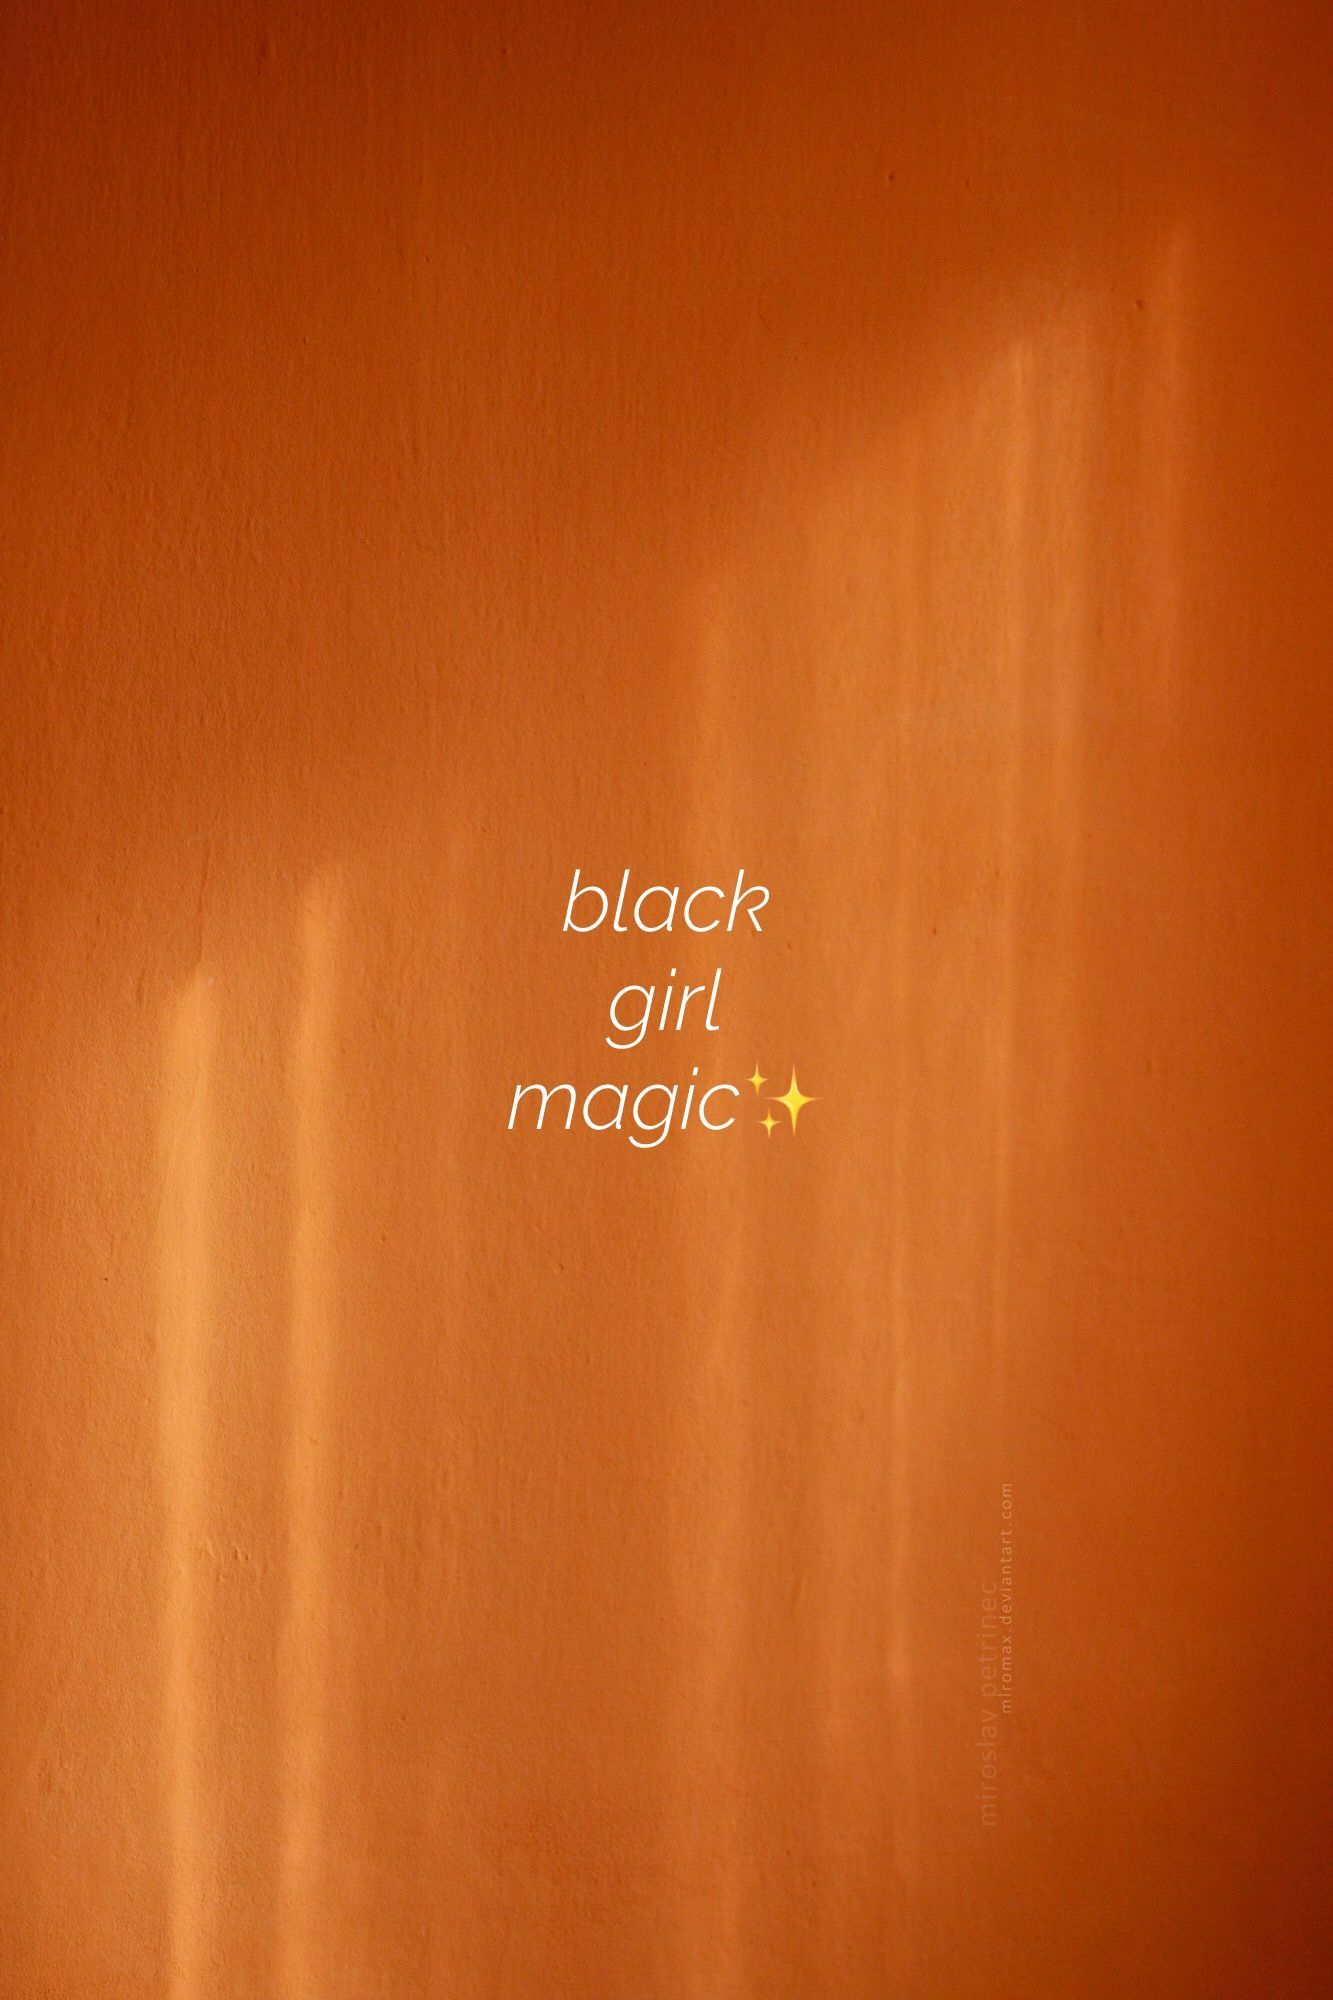 black girl magic✨ Made by me. Magic aesthetic, Girl wallpaper, Drawings of black girls